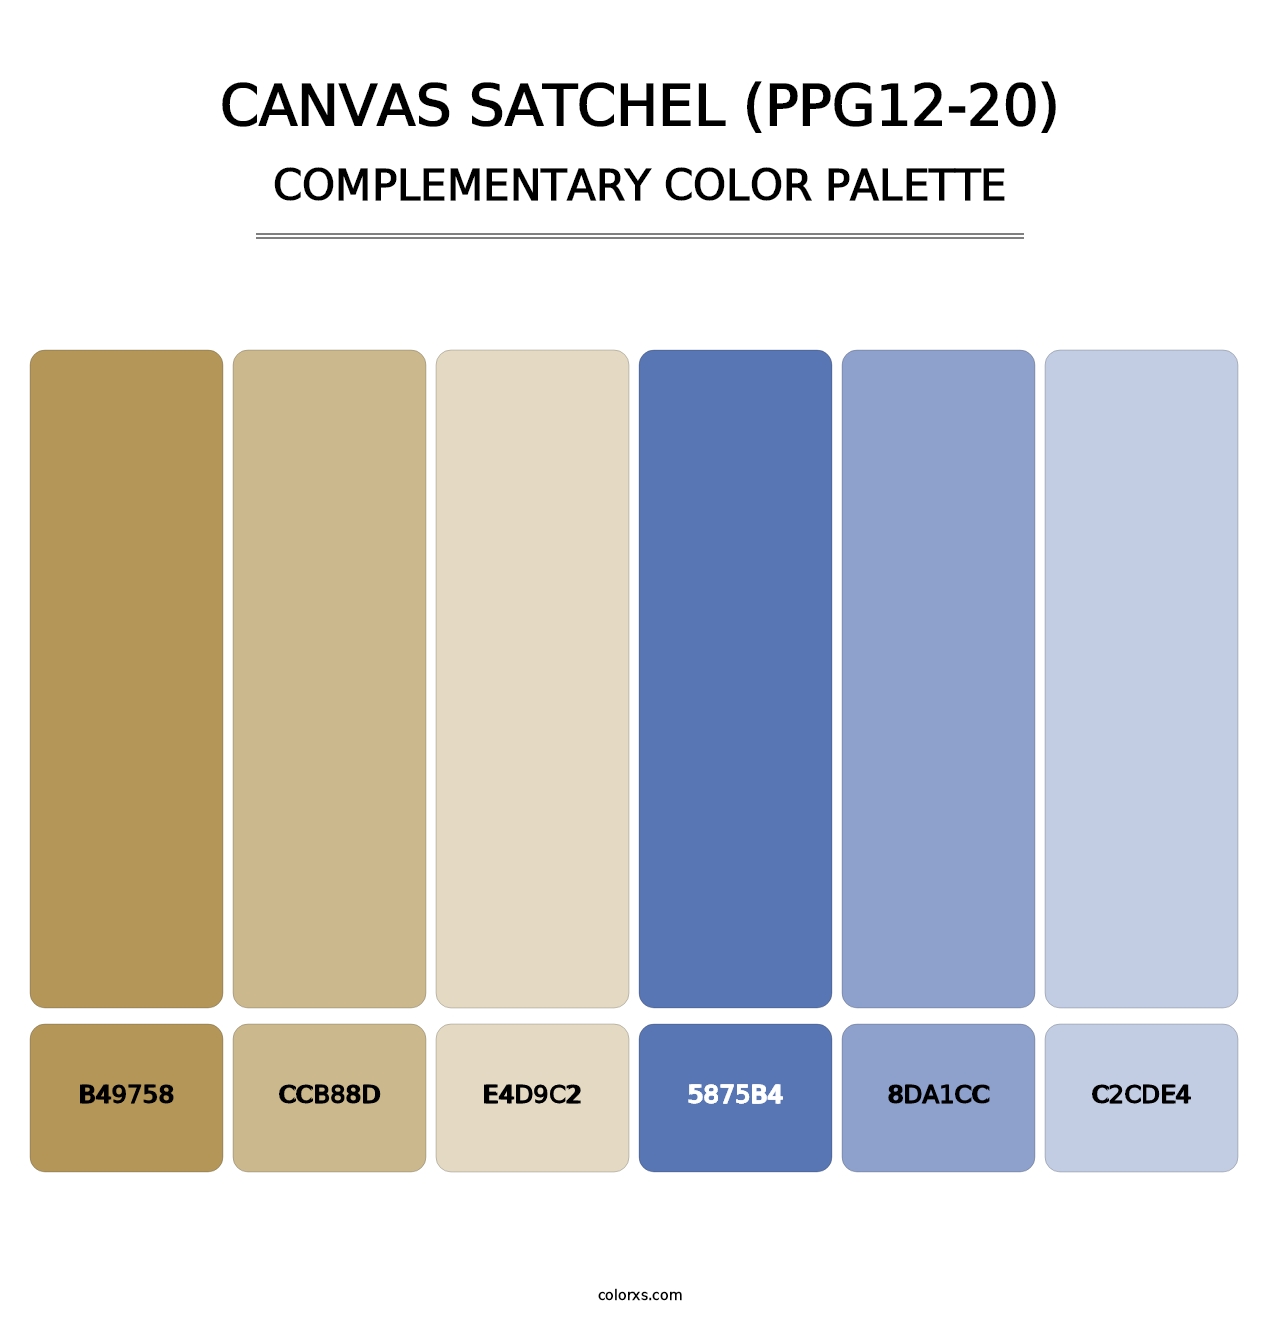 Canvas Satchel (PPG12-20) - Complementary Color Palette